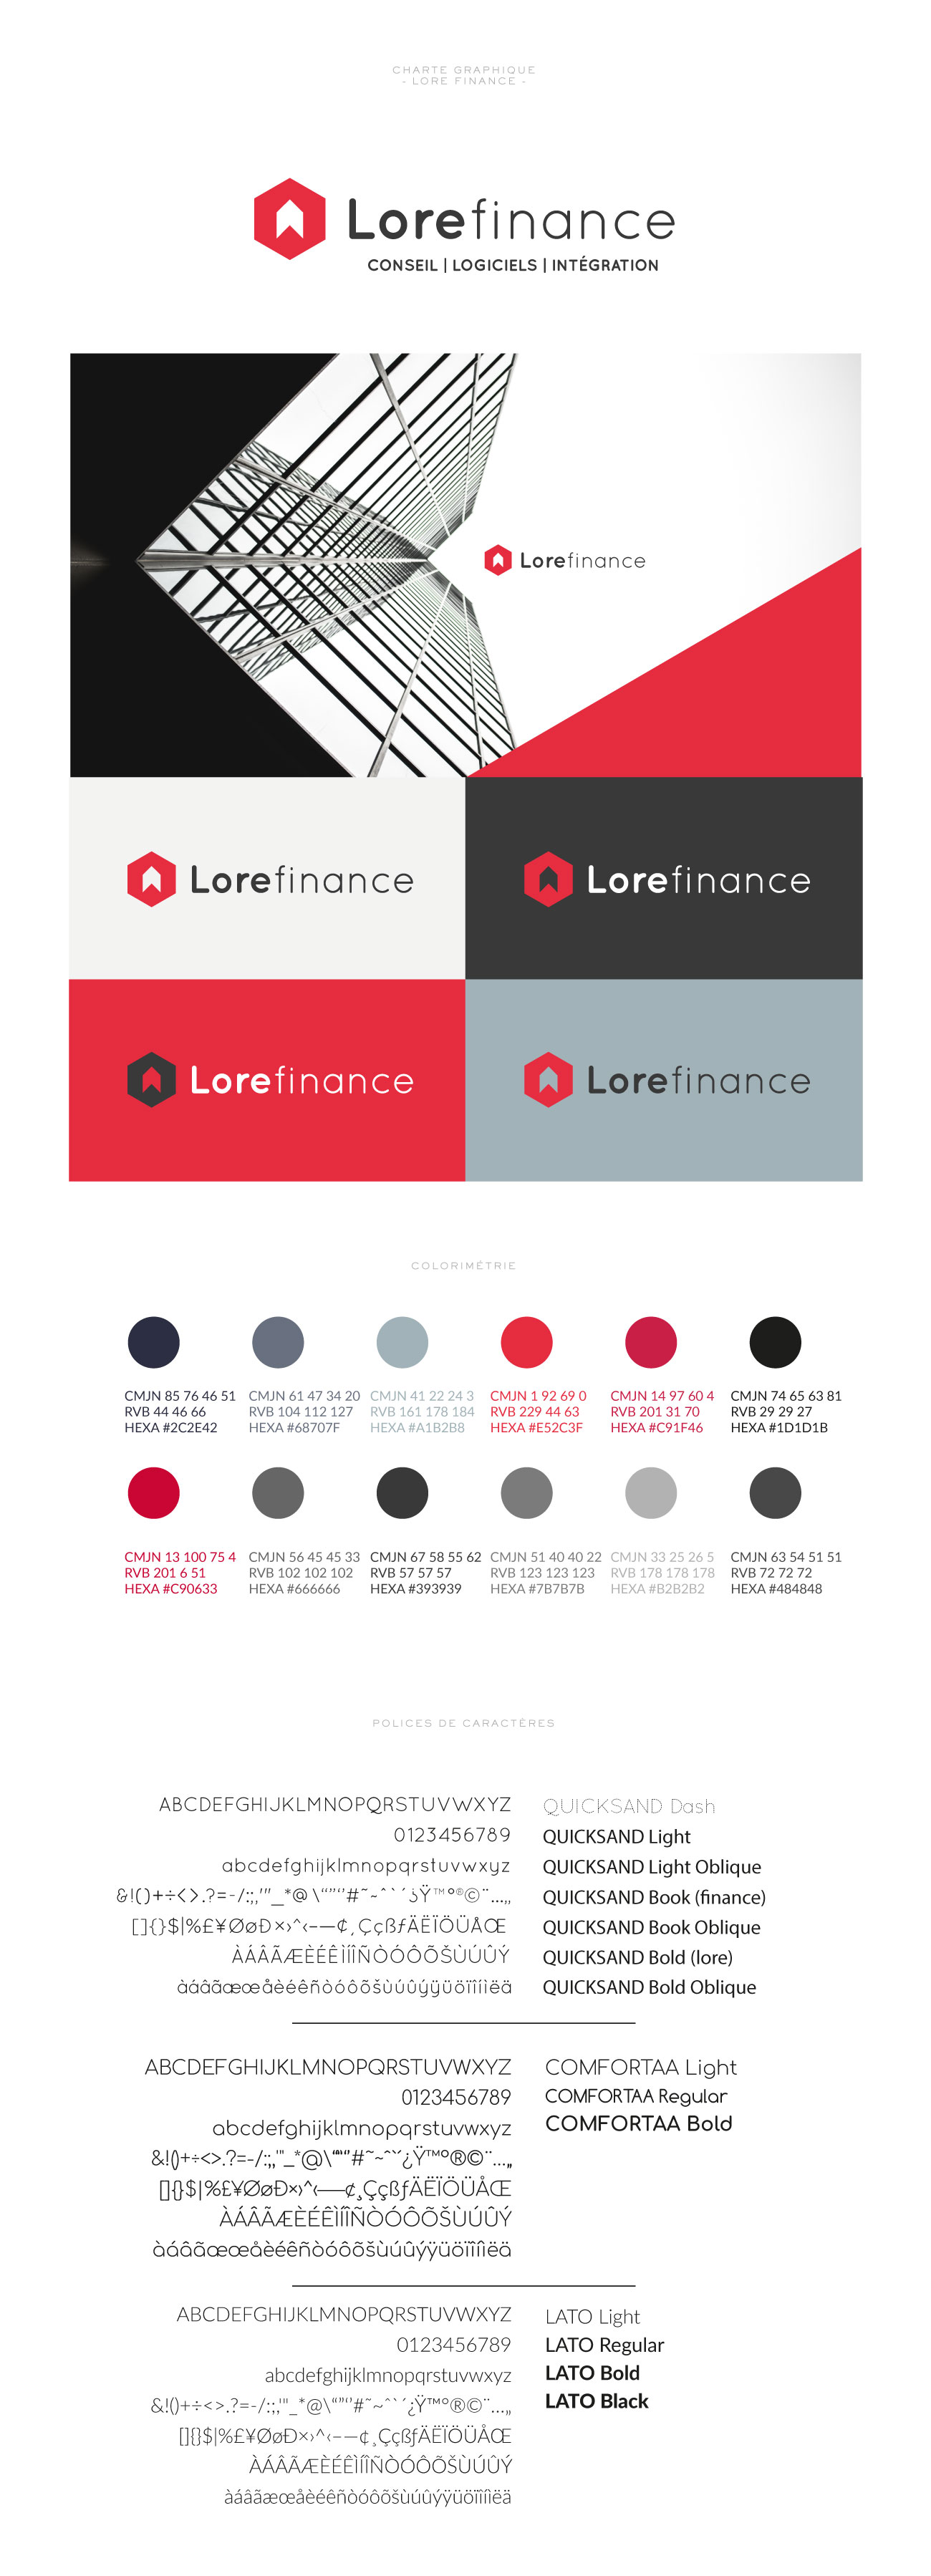 Lore-Finance-charte-graphique-by-AitanaDesign